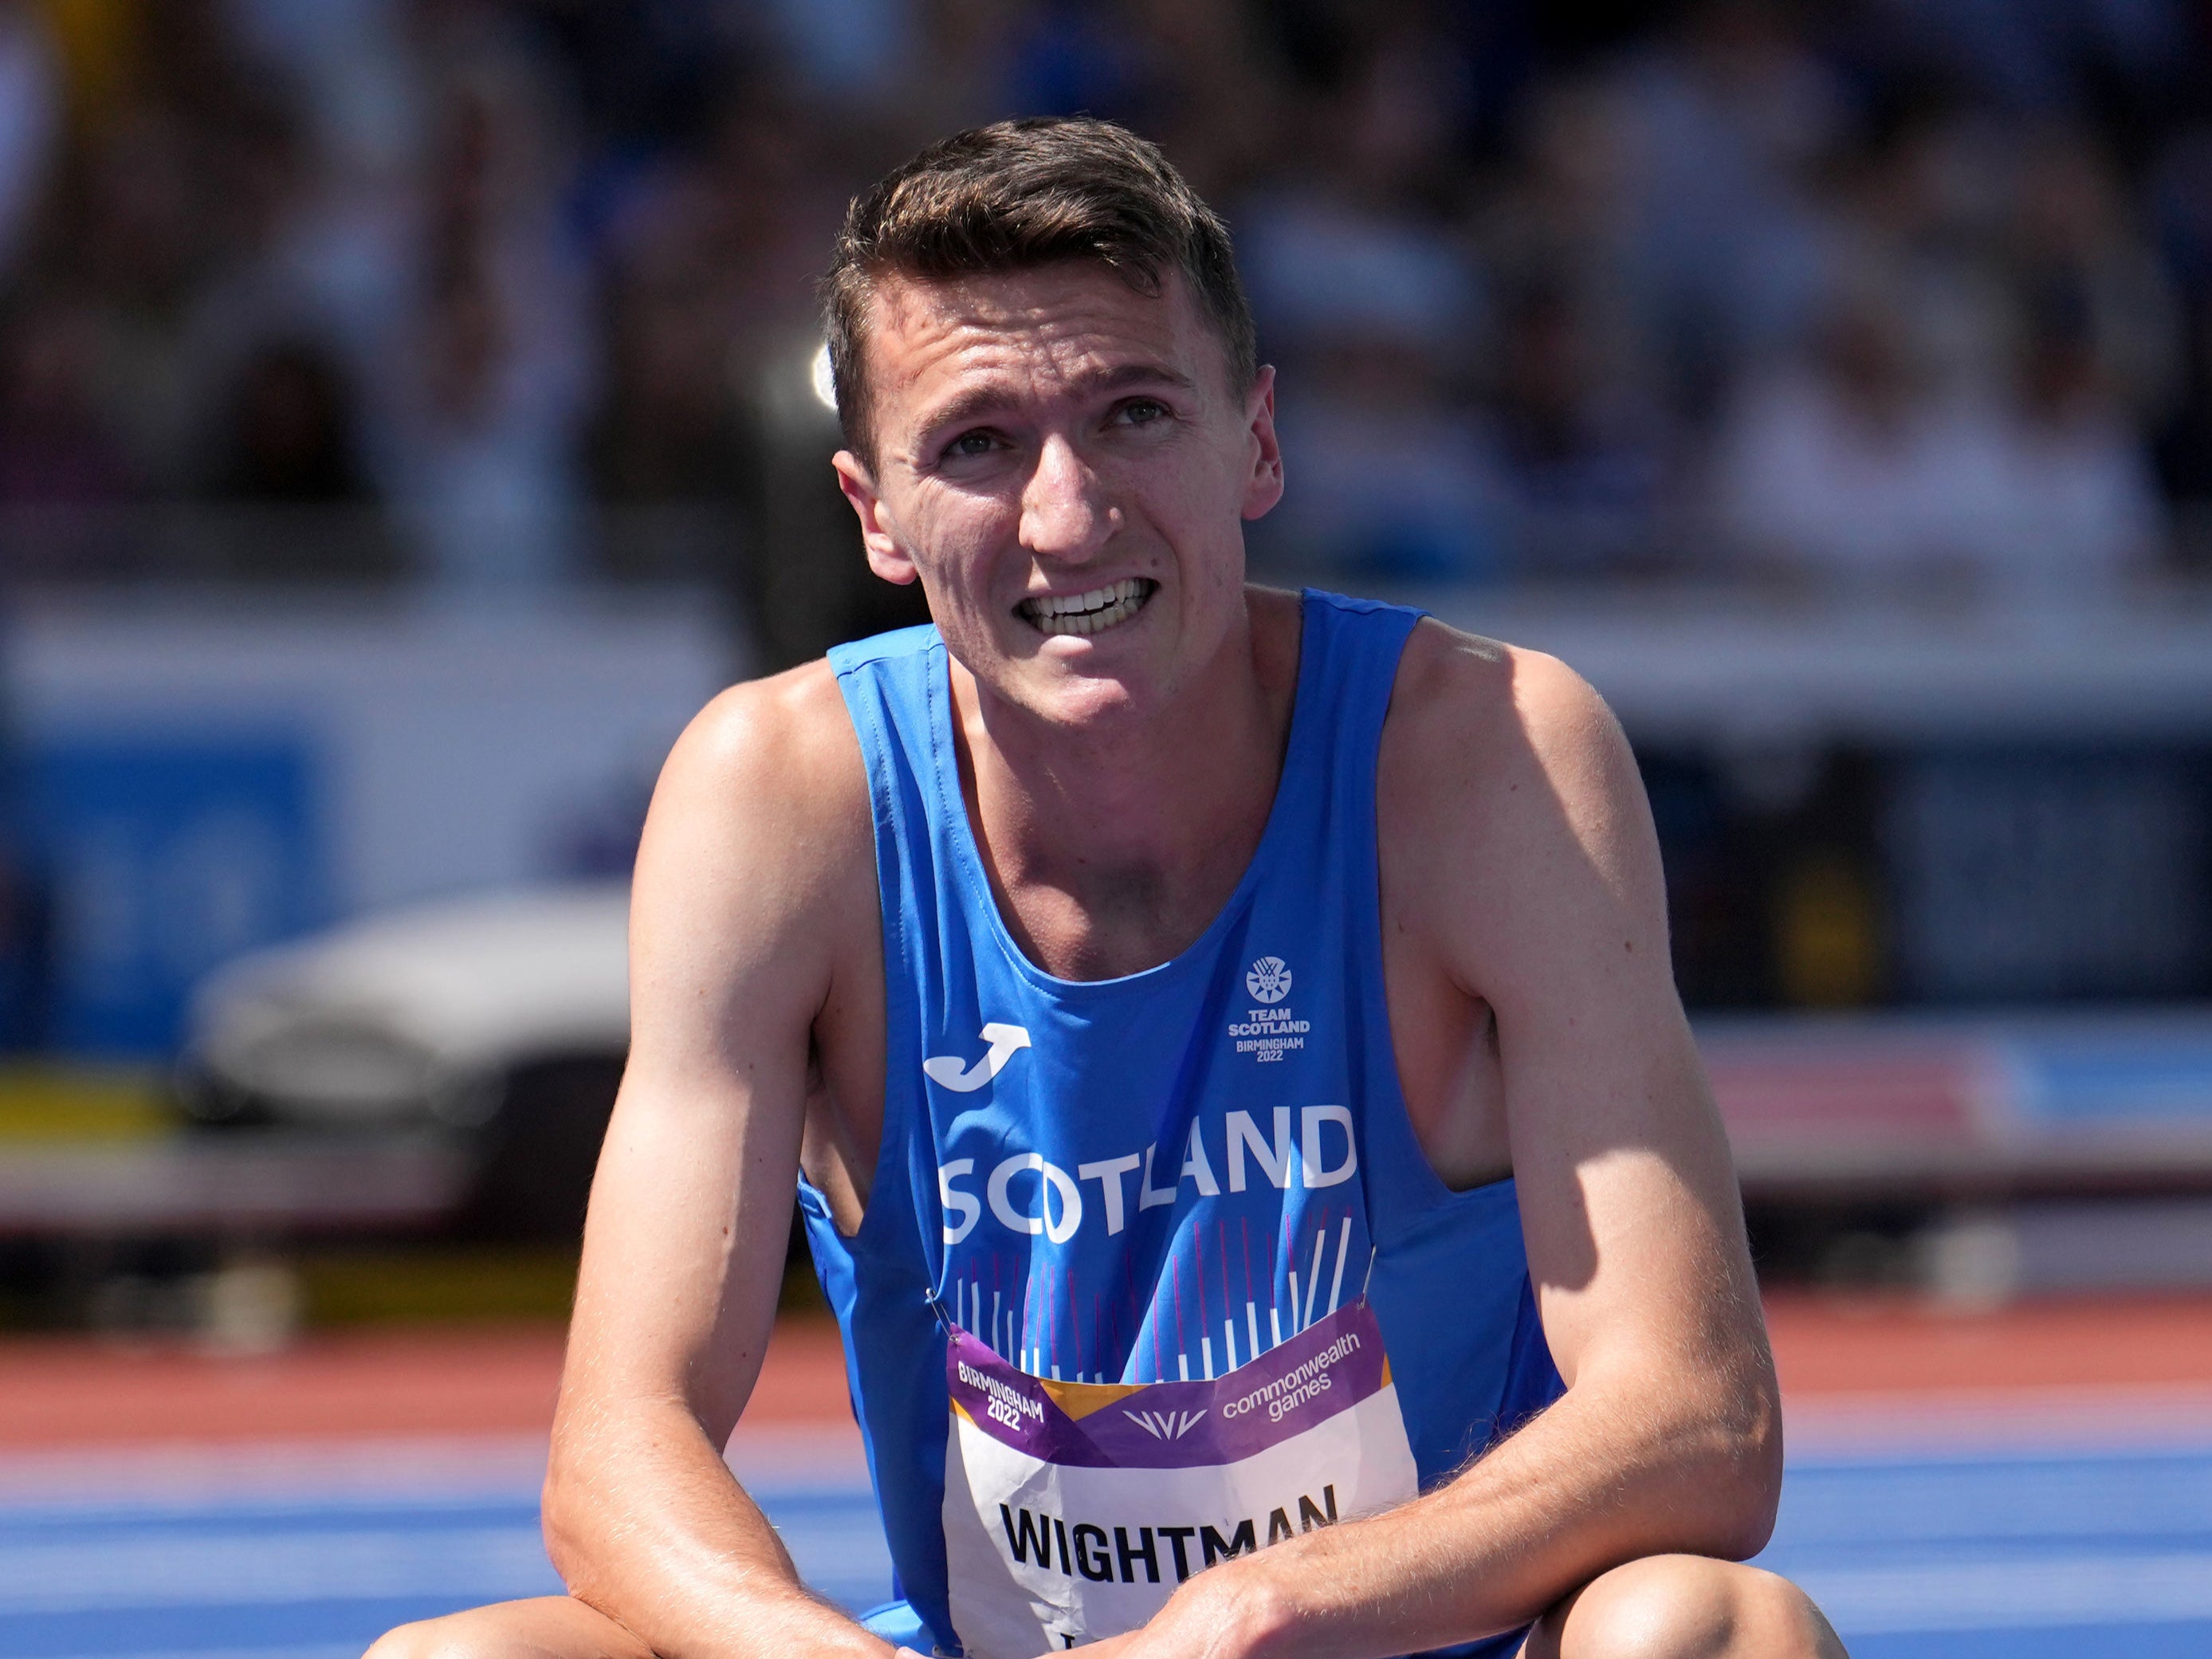 Wightman came third in a tough 1,500m final in Birmingham